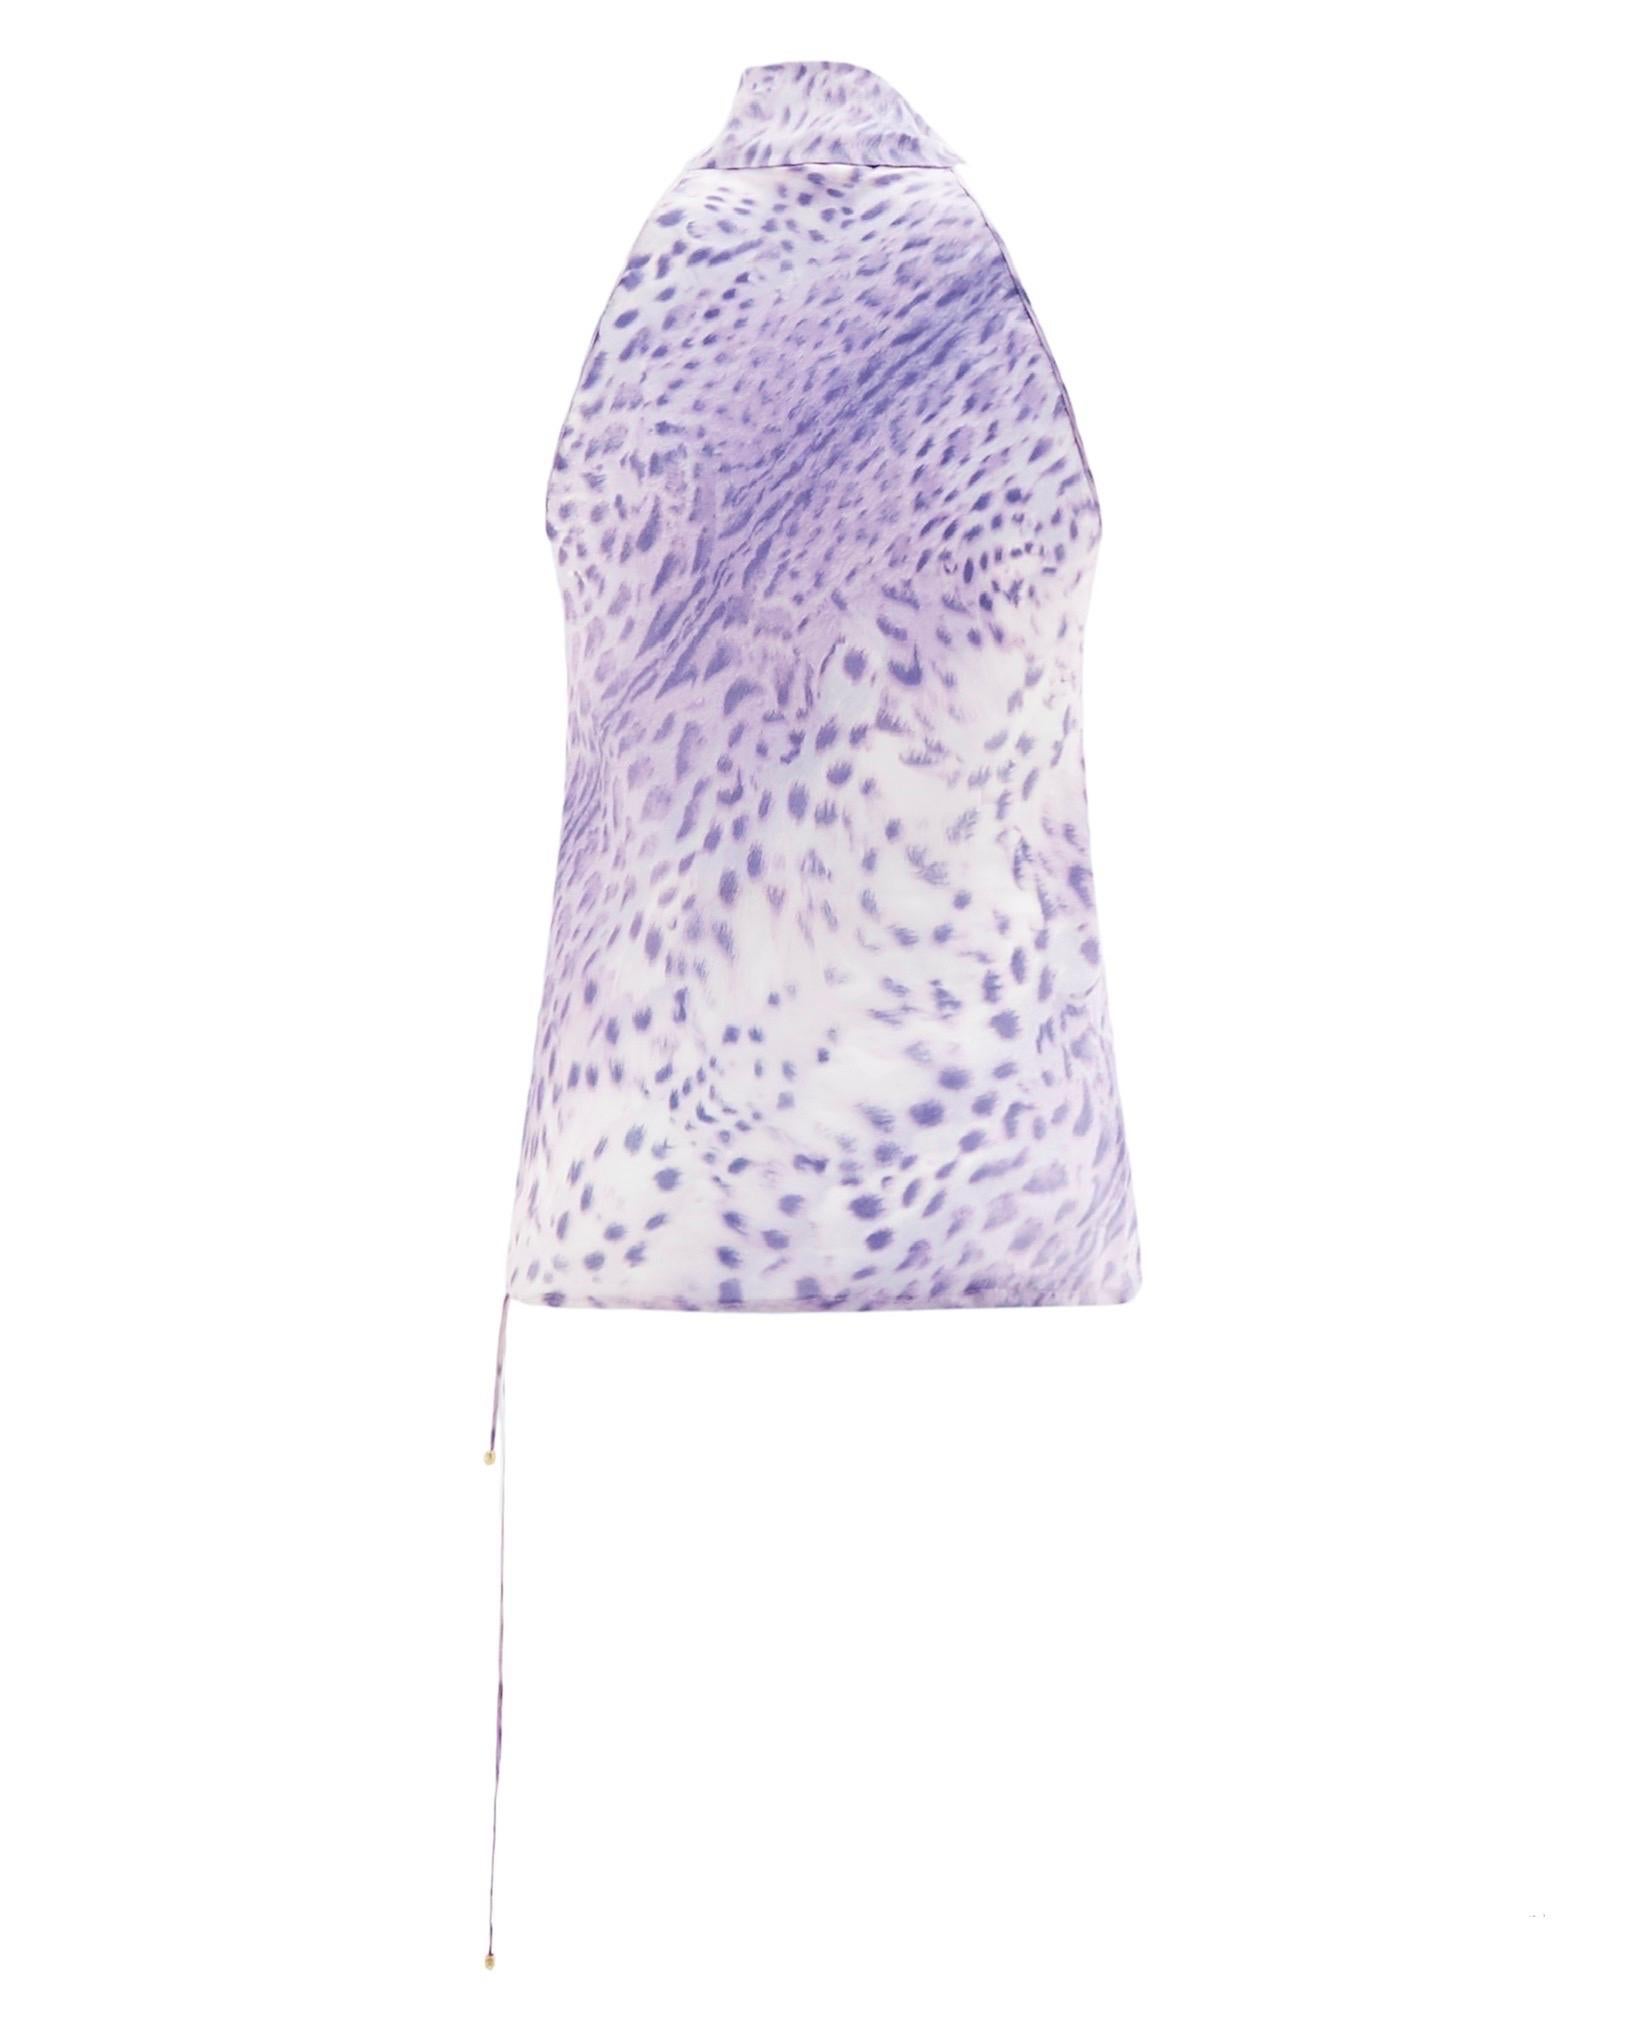 • Turtleneck sleeveless top
• Lilac leopard print
• Side bottom fastening strings
• Runway piece